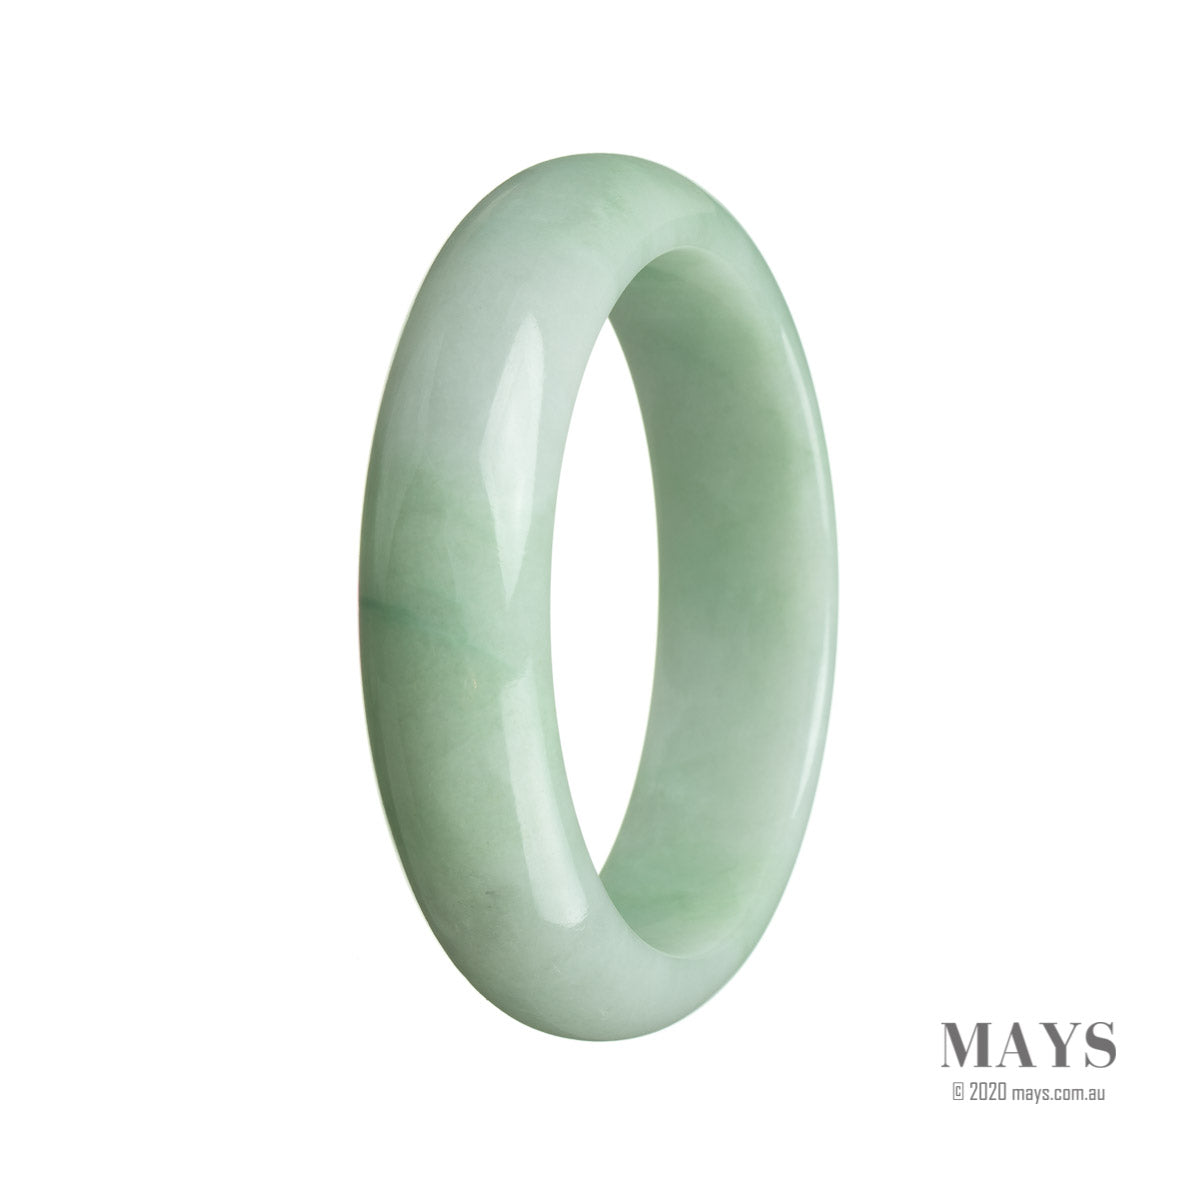 A light green Burmese jade bangle bracelet with a half-moon shape, measuring 57mm in size.